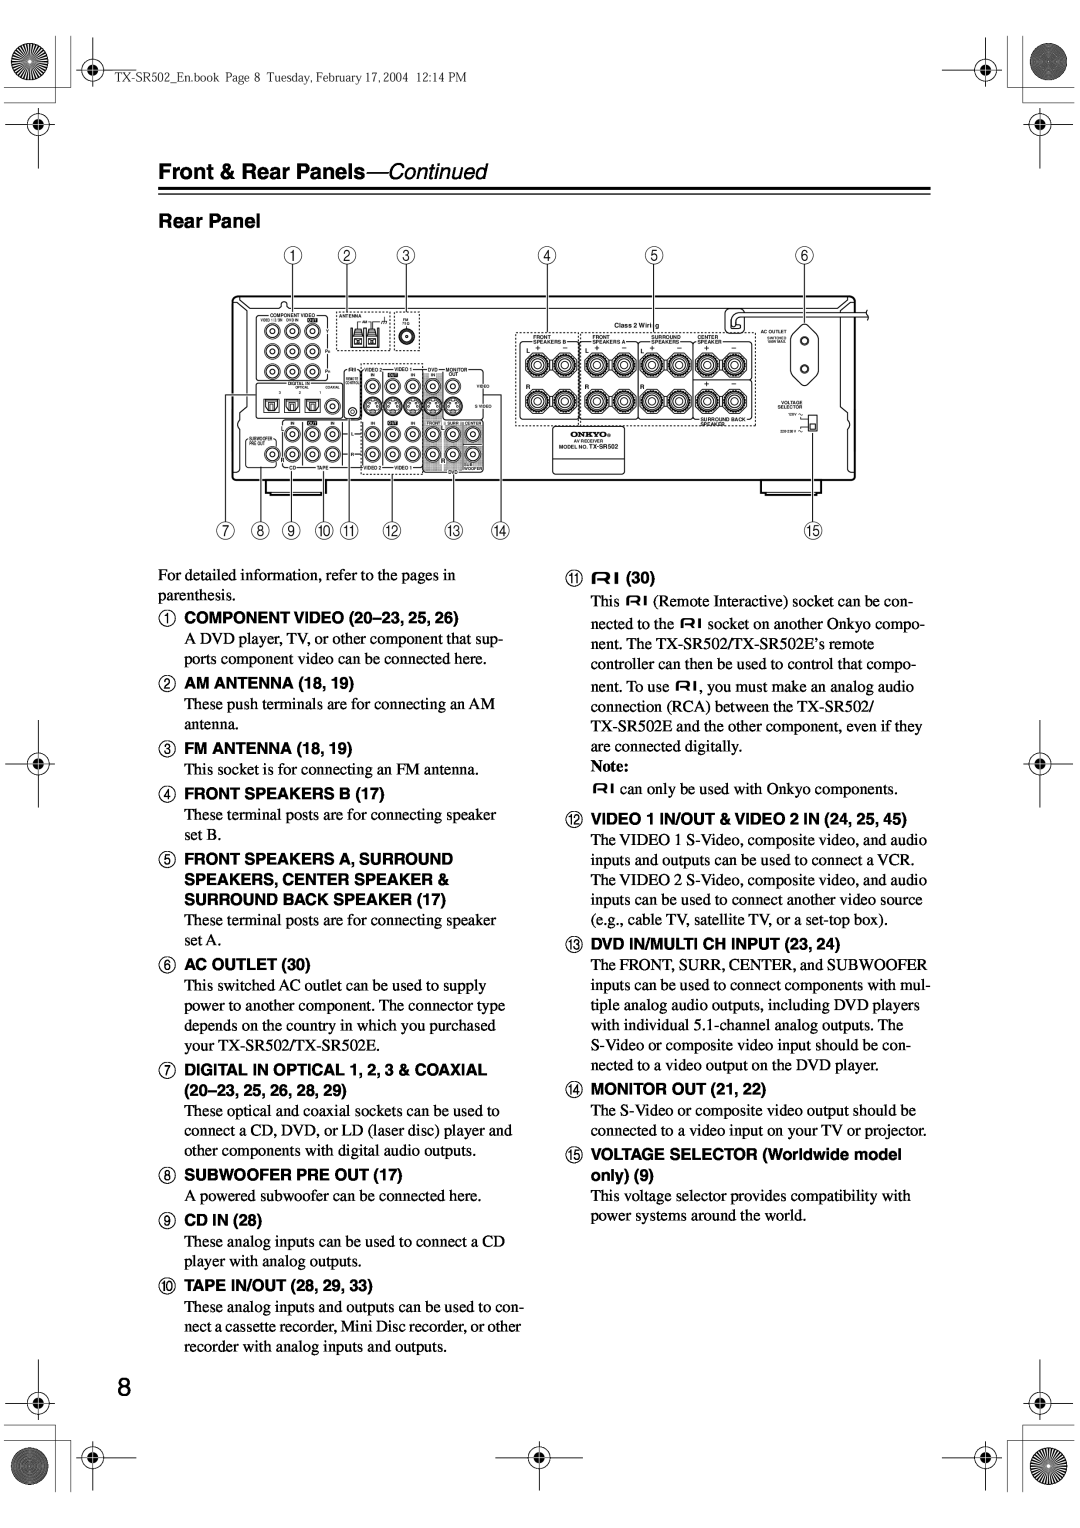 Onkyo TX-SR502E instruction manual Front & Rear Panels-Continued, 7 8 9 J K 